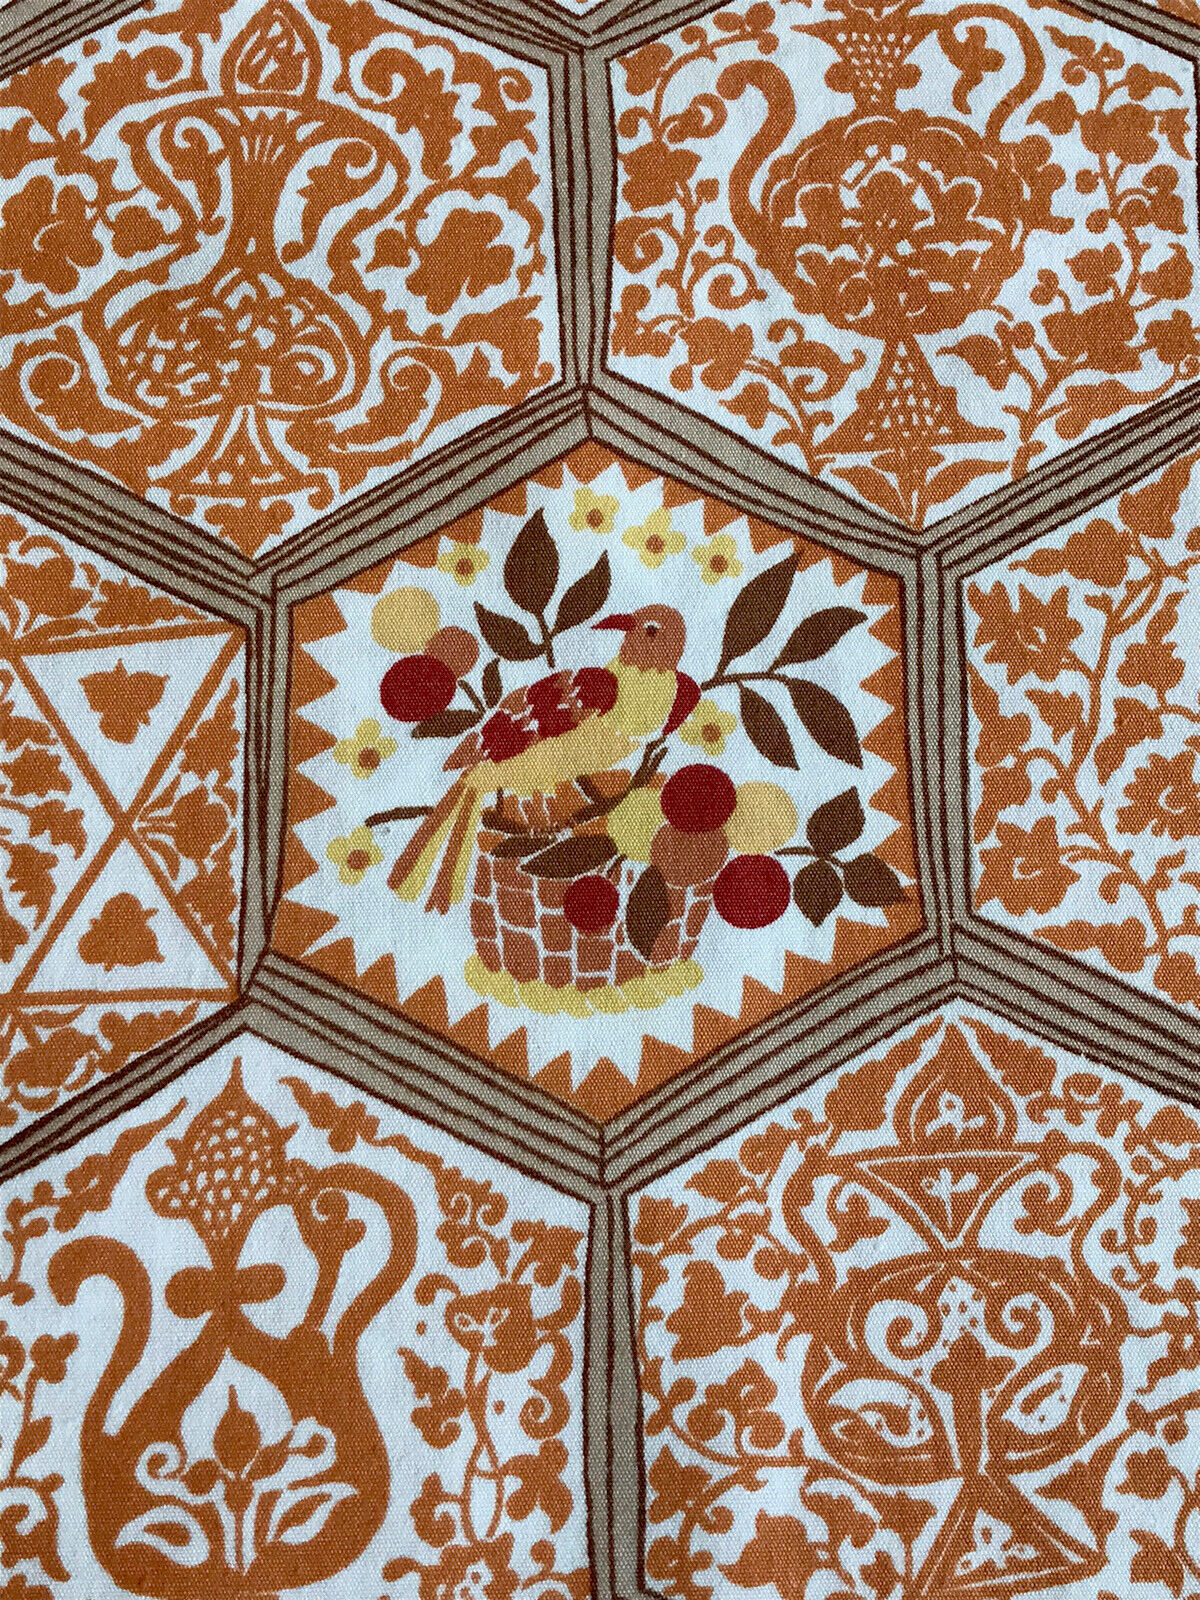 Jonelle 1980 ‘Alhambra’ Tangerine&Pantry White Bird&Floral cotton FQ 56x46